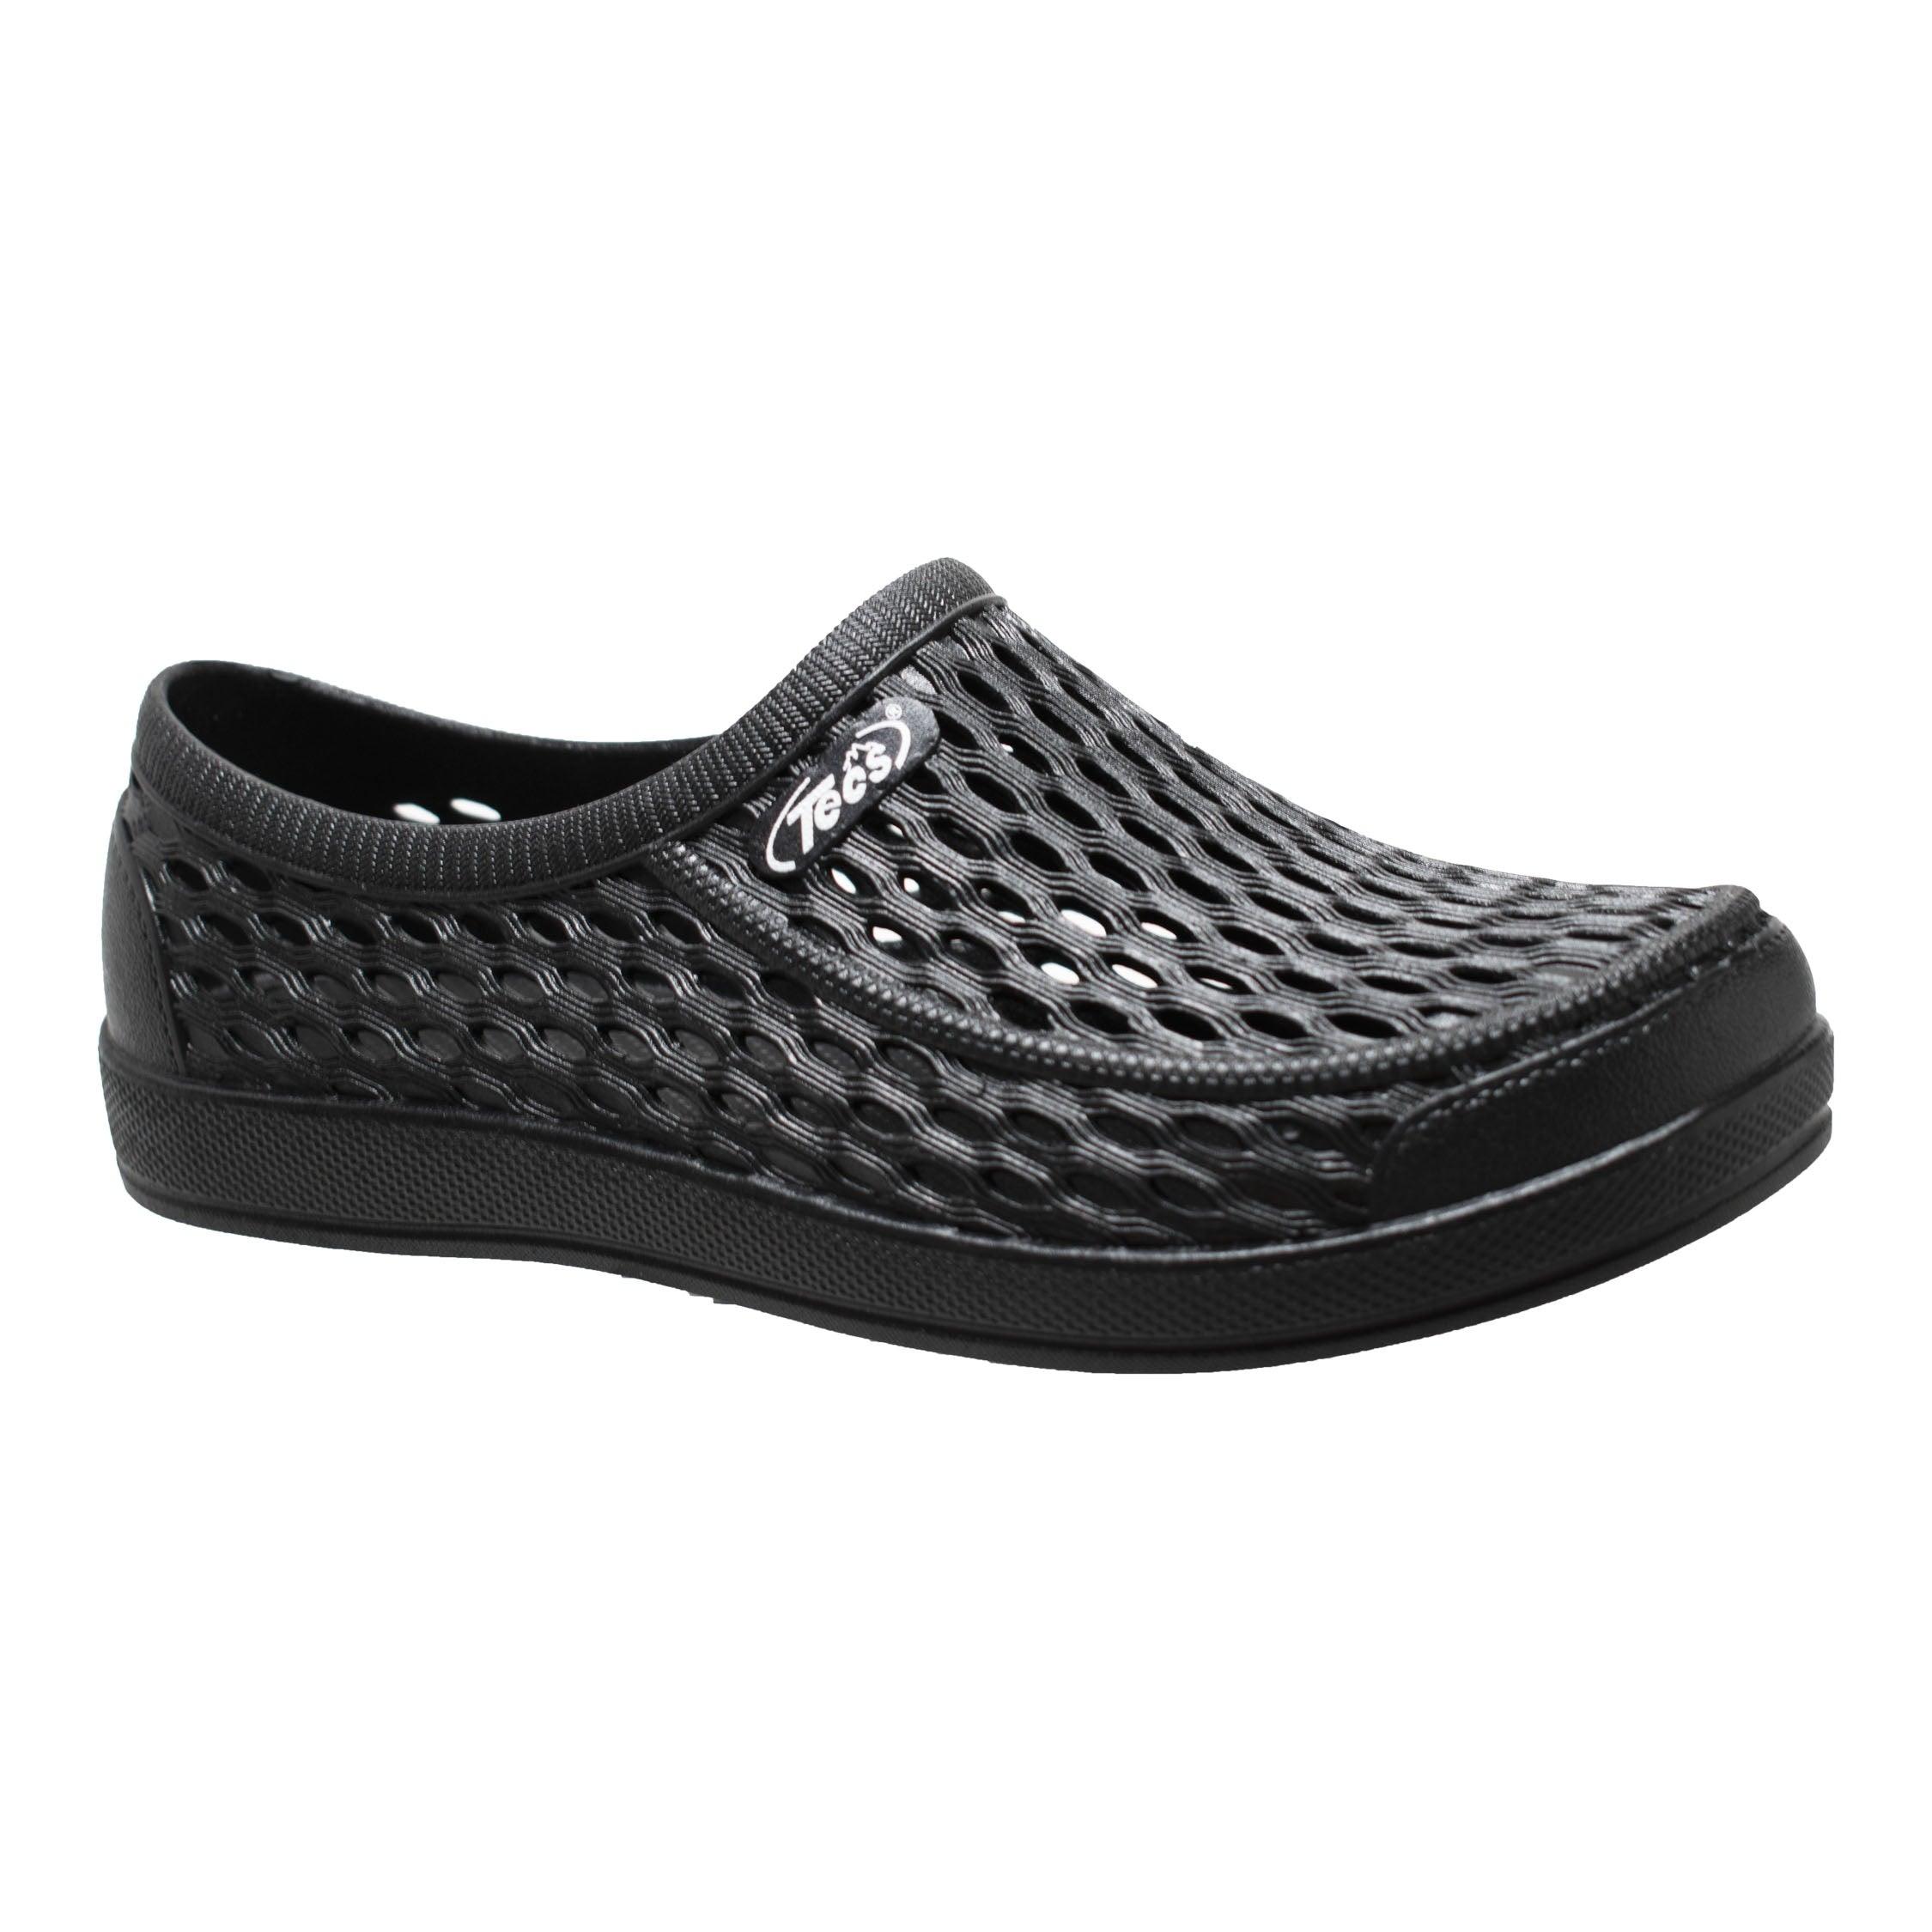 Tecs Women's 4" Relax Aqua Tecs Garden Shoe Black - Flyclothing LLC